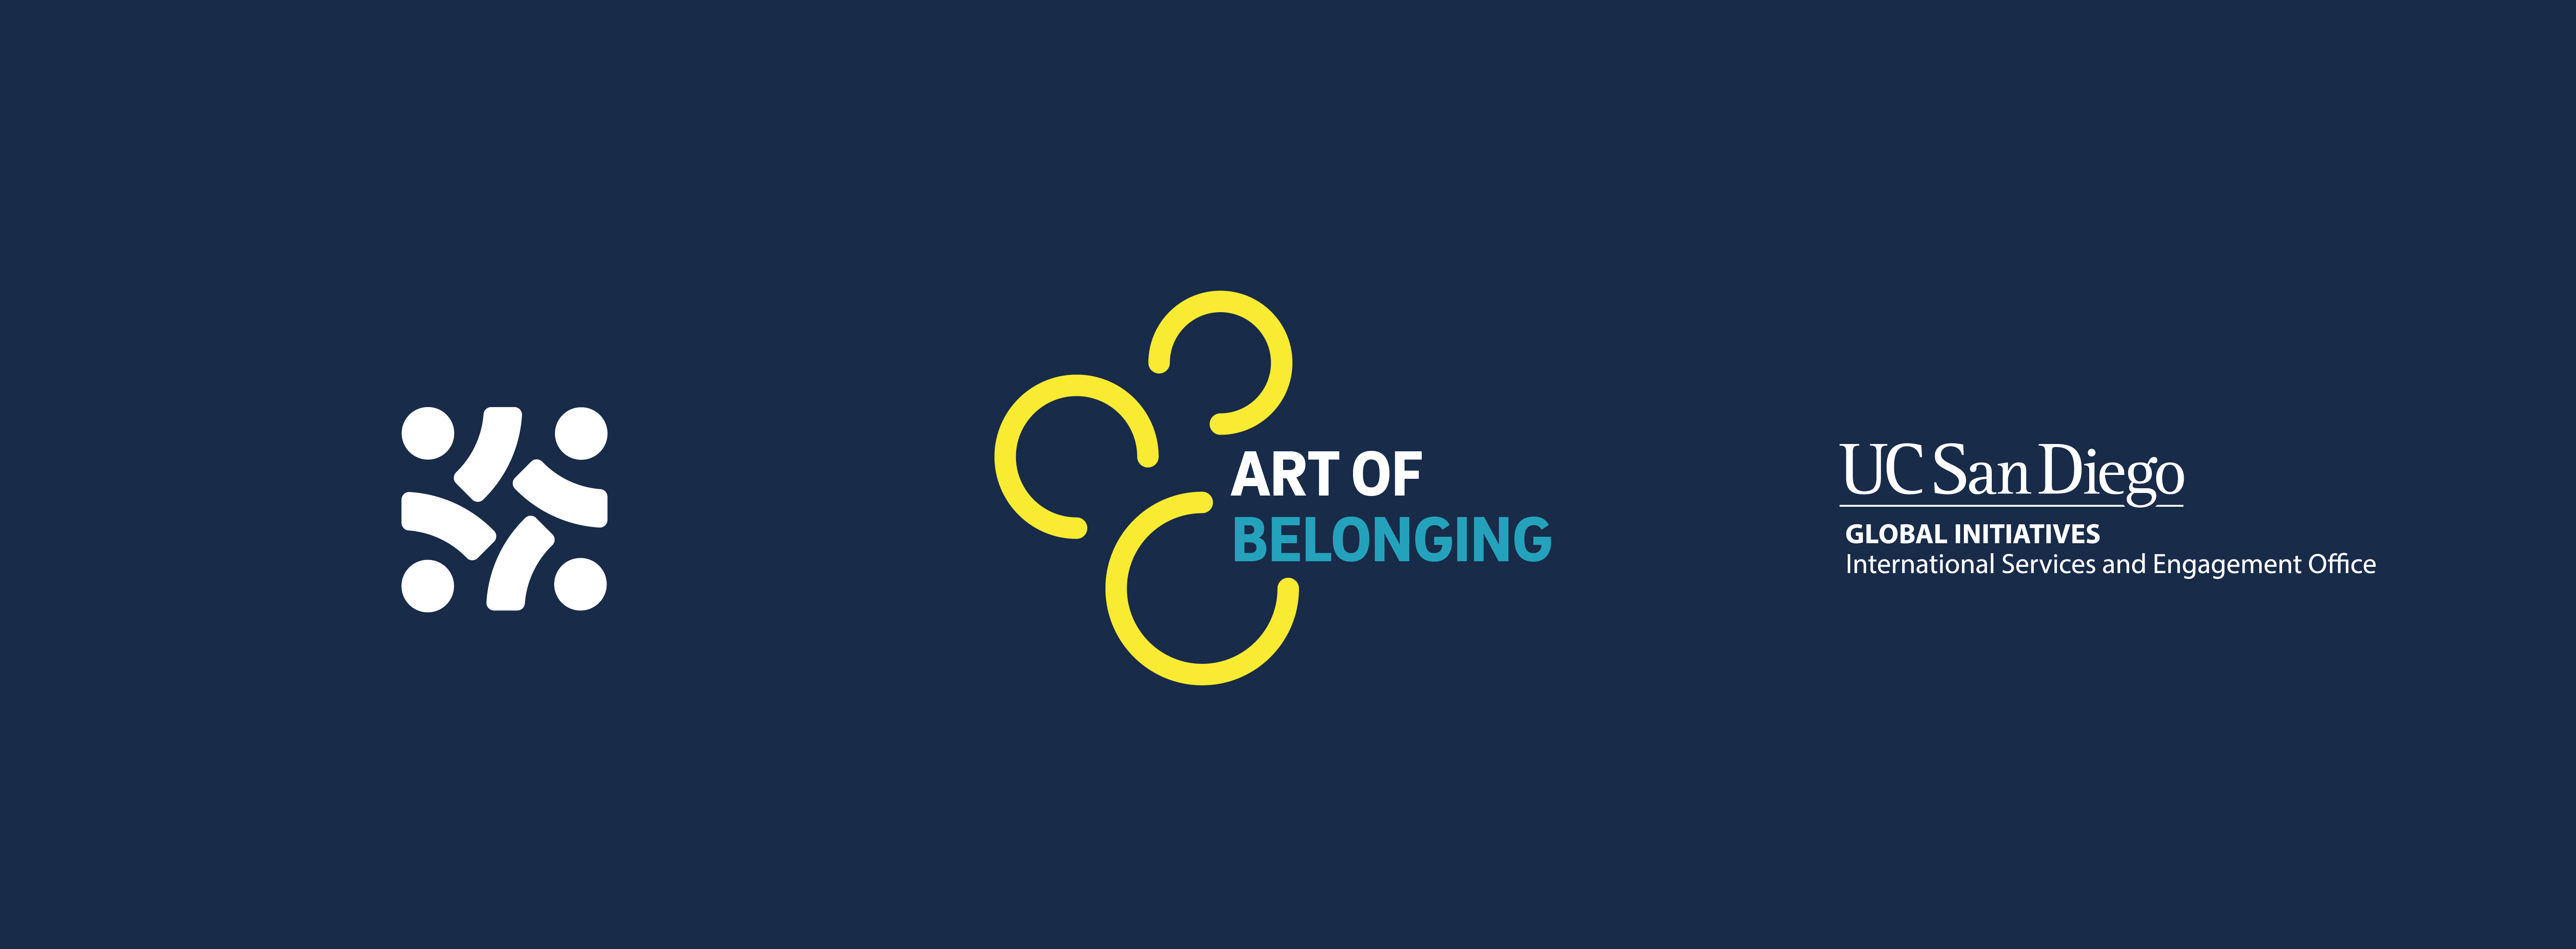 ISEO_ArtBelonging_Banner.png